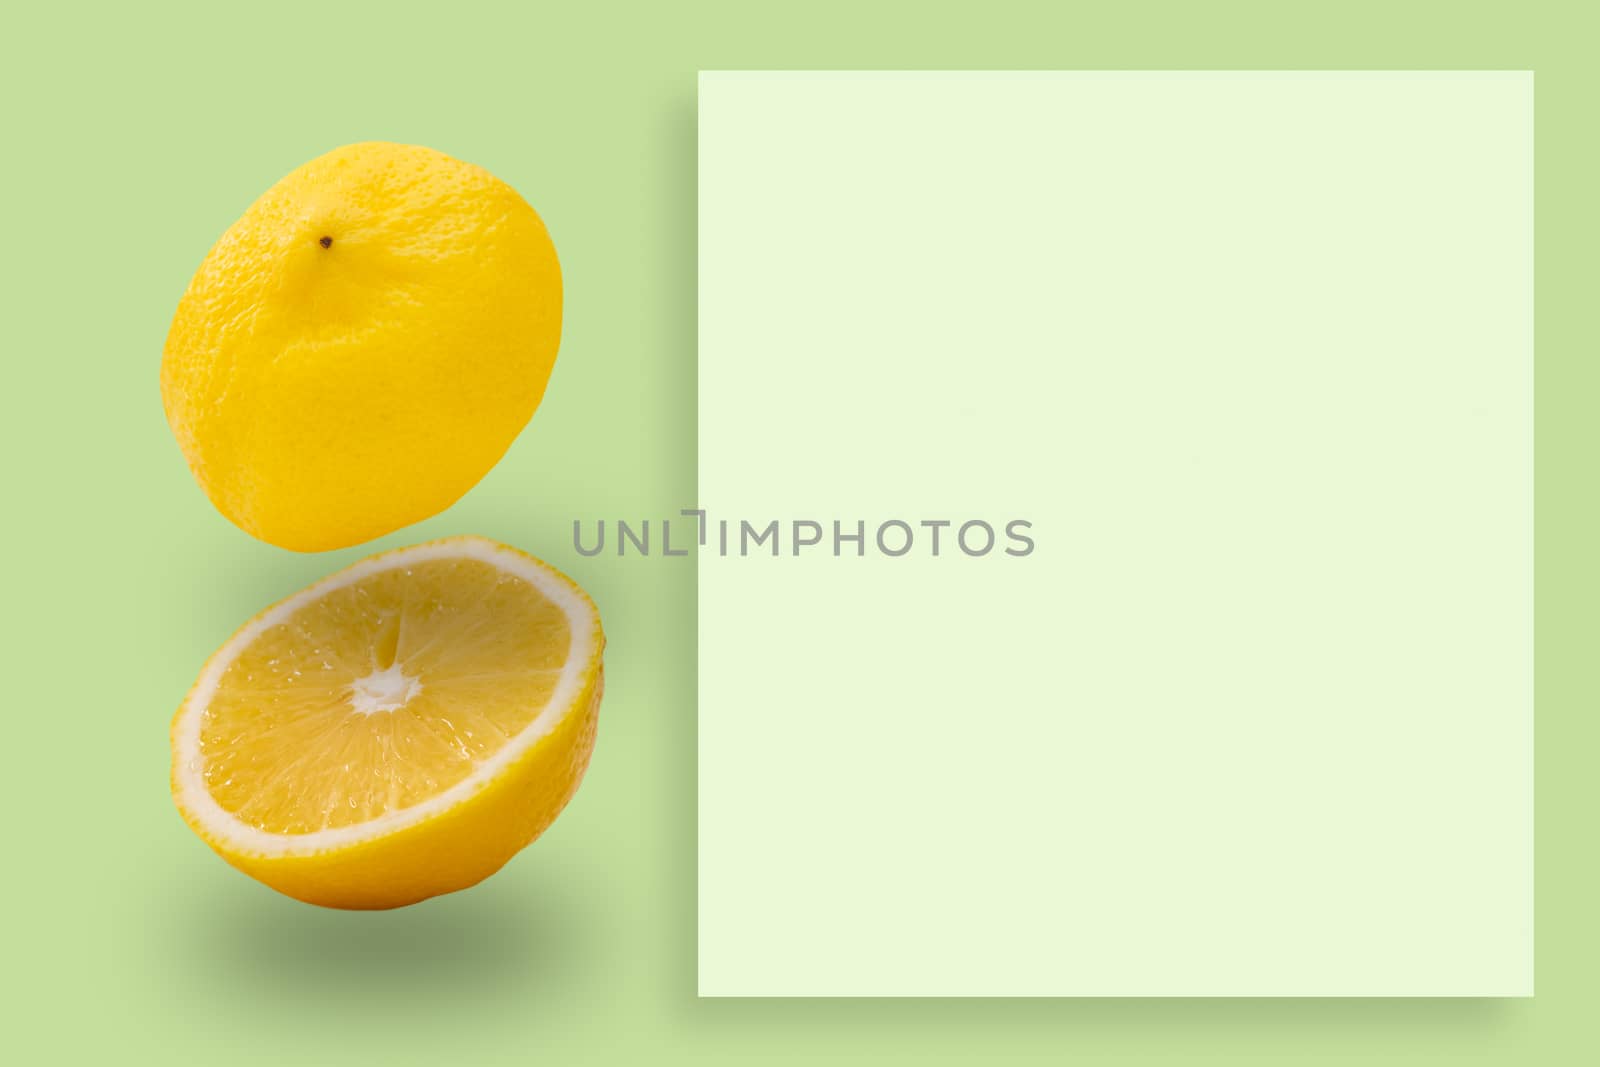 Lemon slices pattern on green background. Food concept.